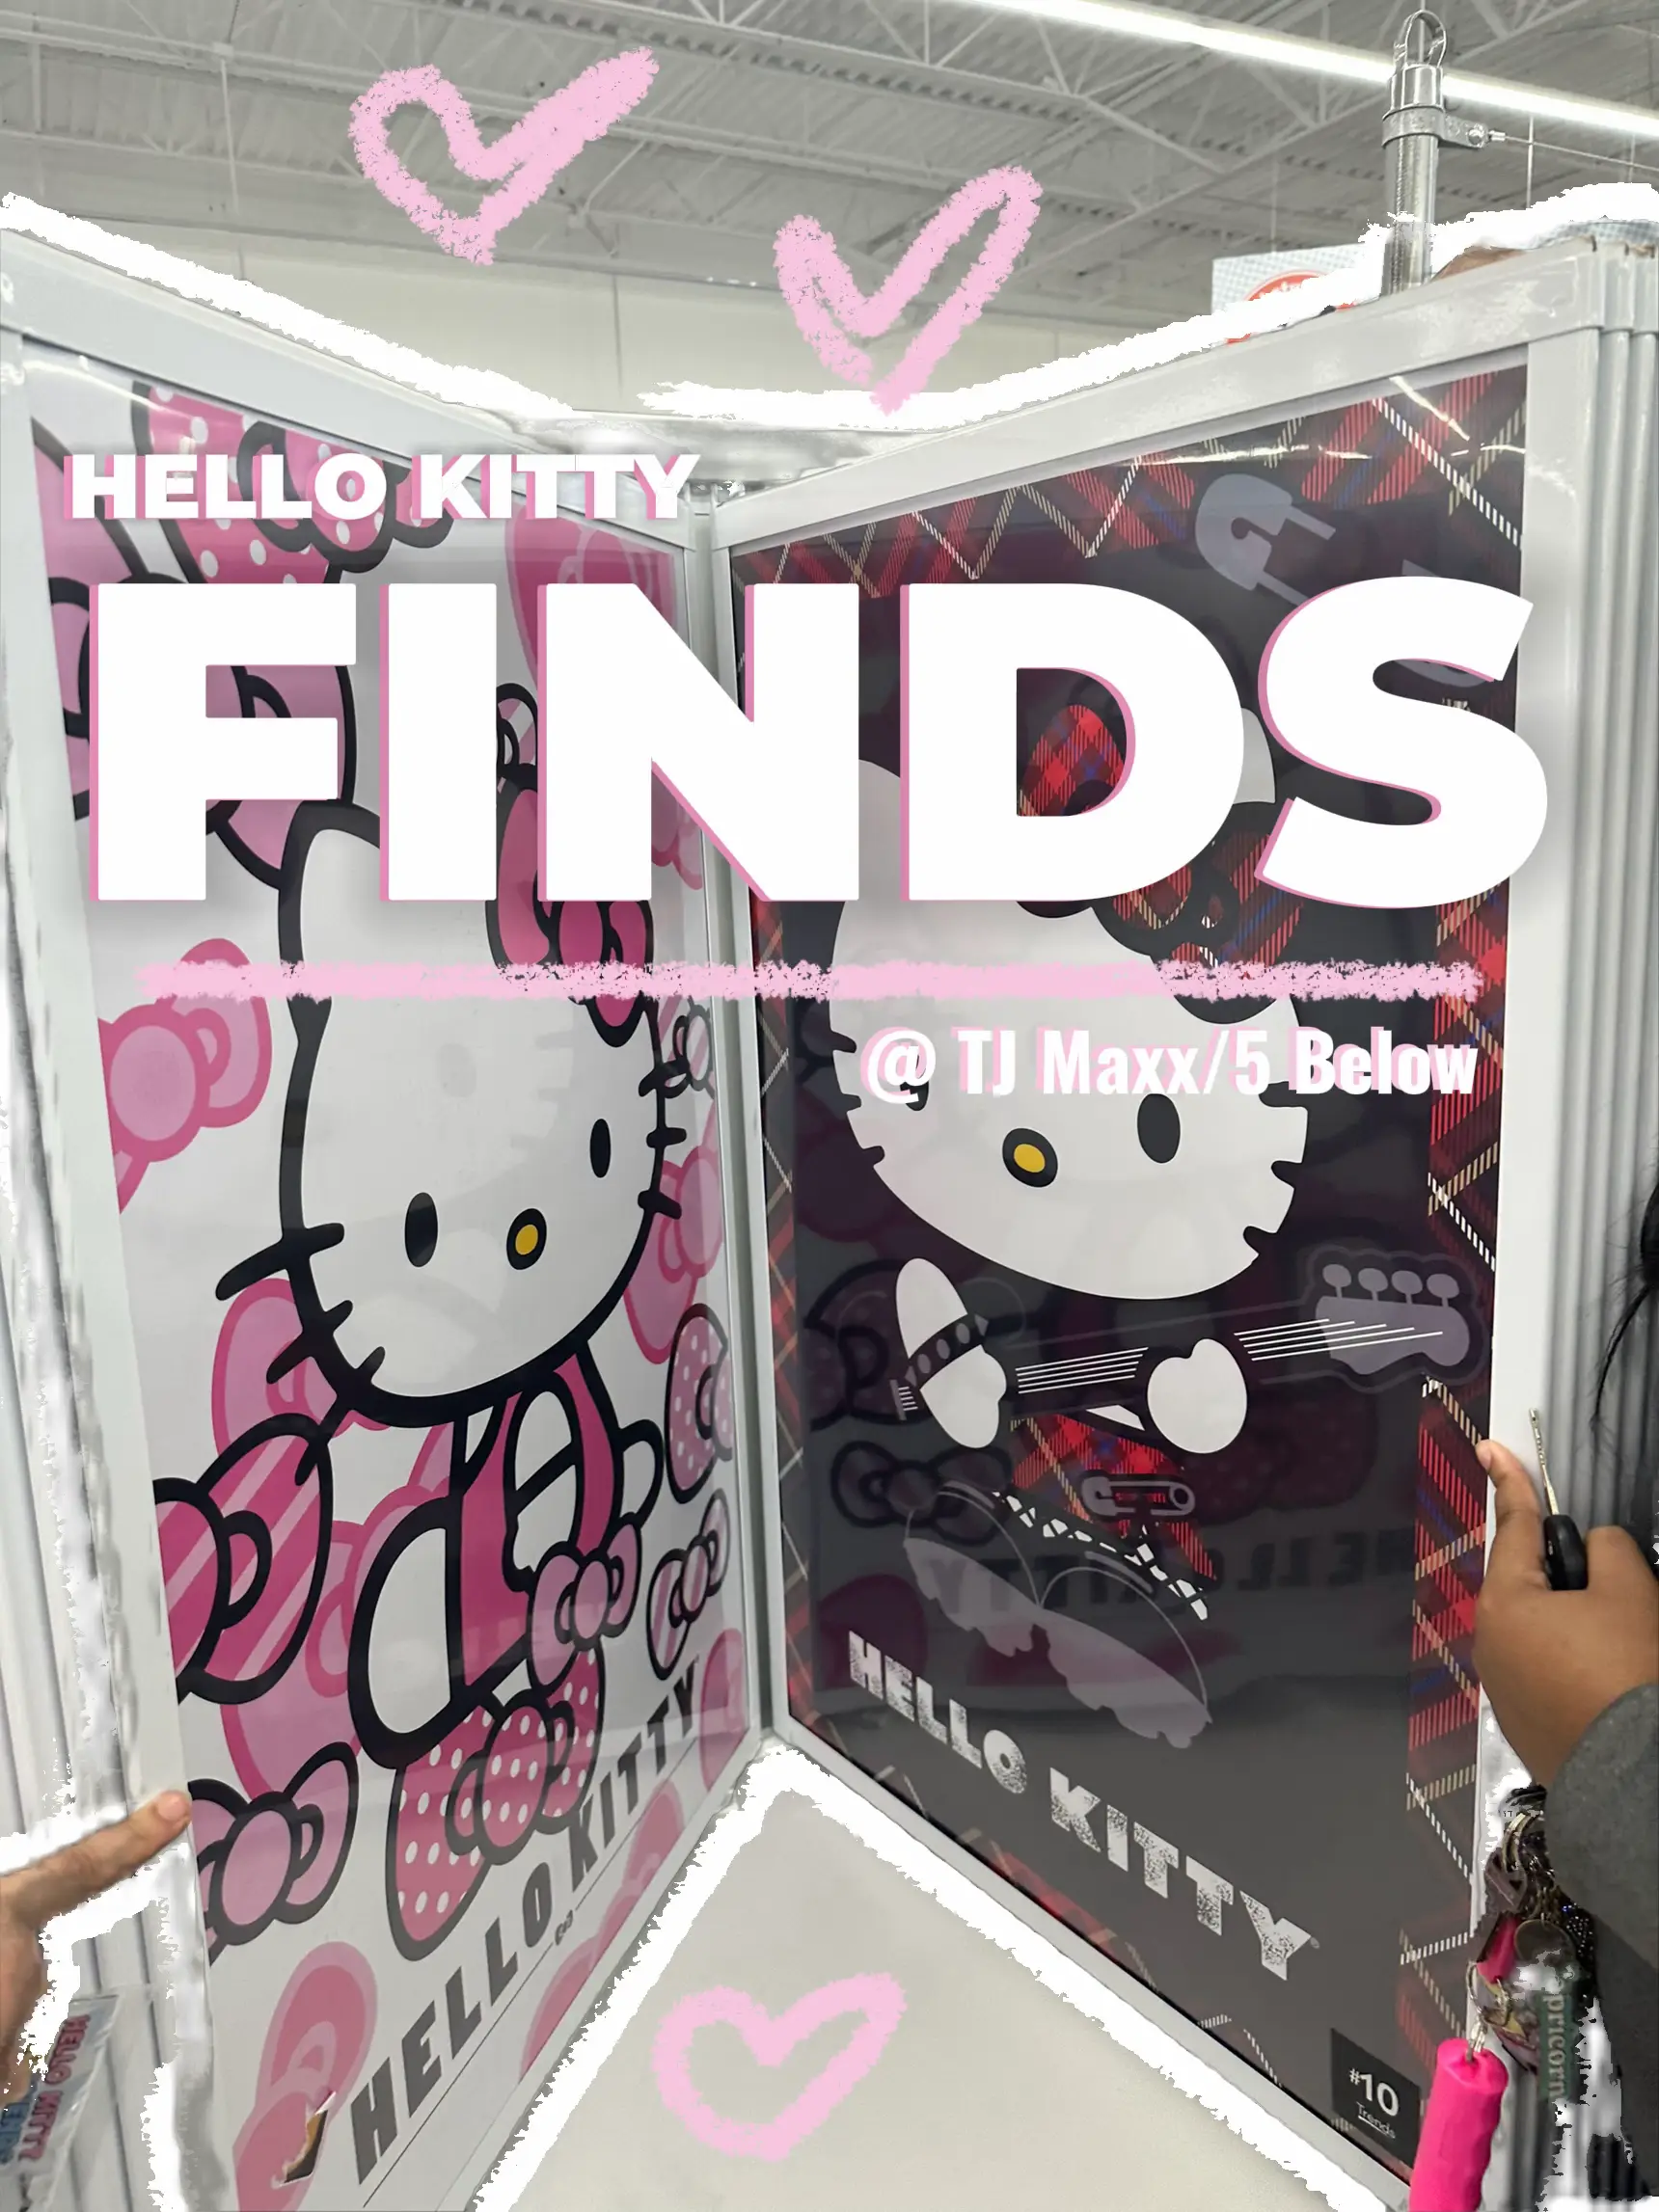 2024 Kawaii 3D Hello Kitty Printed Long Sleeve Tops Women Autumn